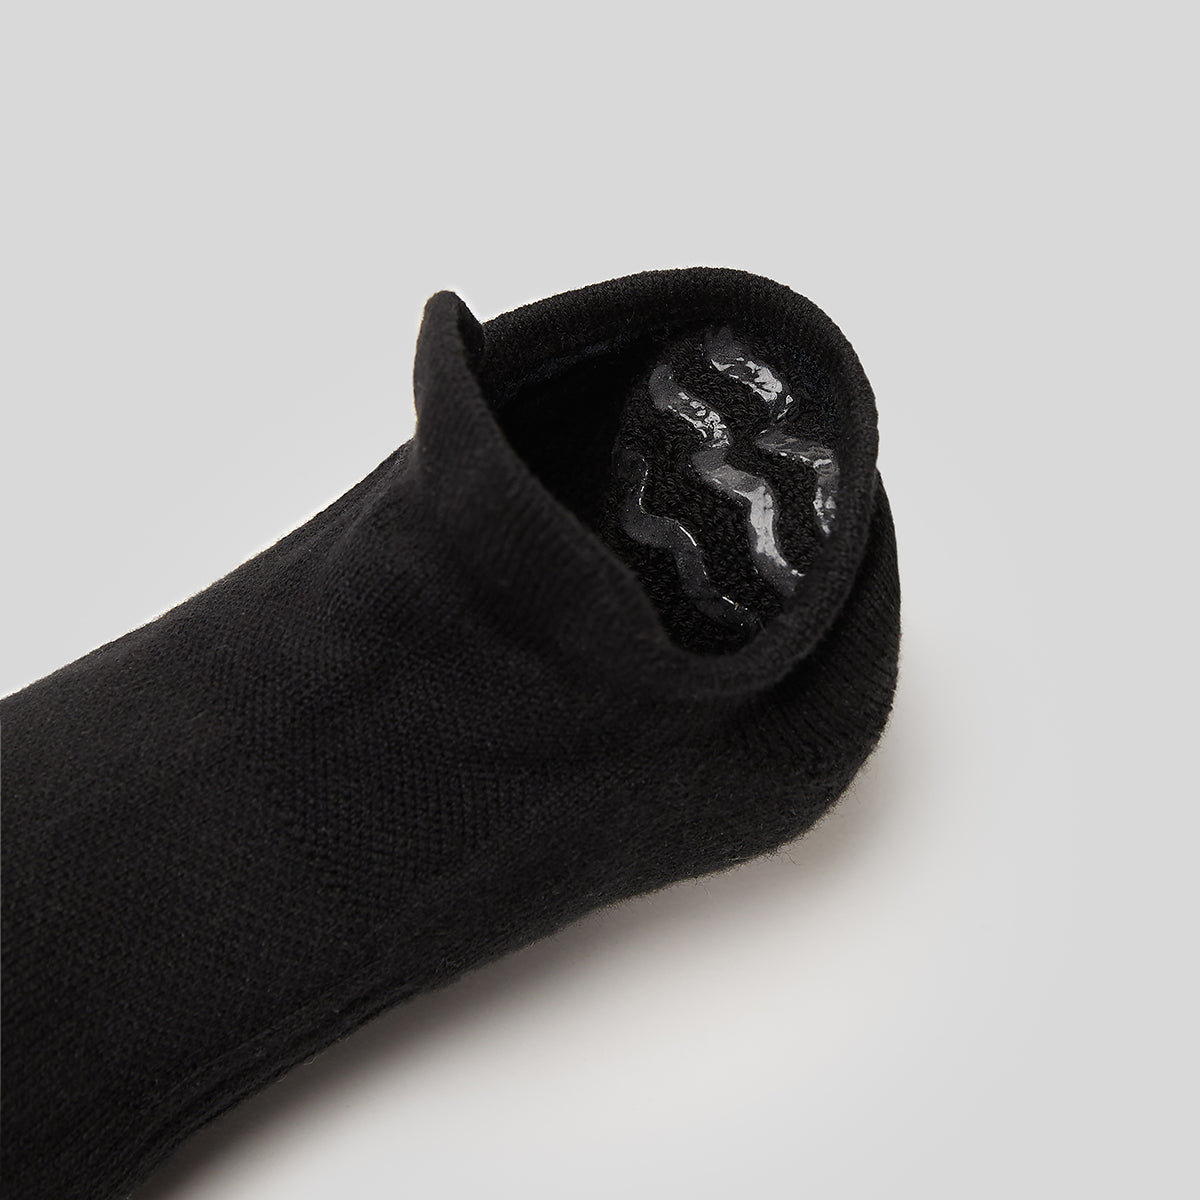 Close view inside the black low cut sock